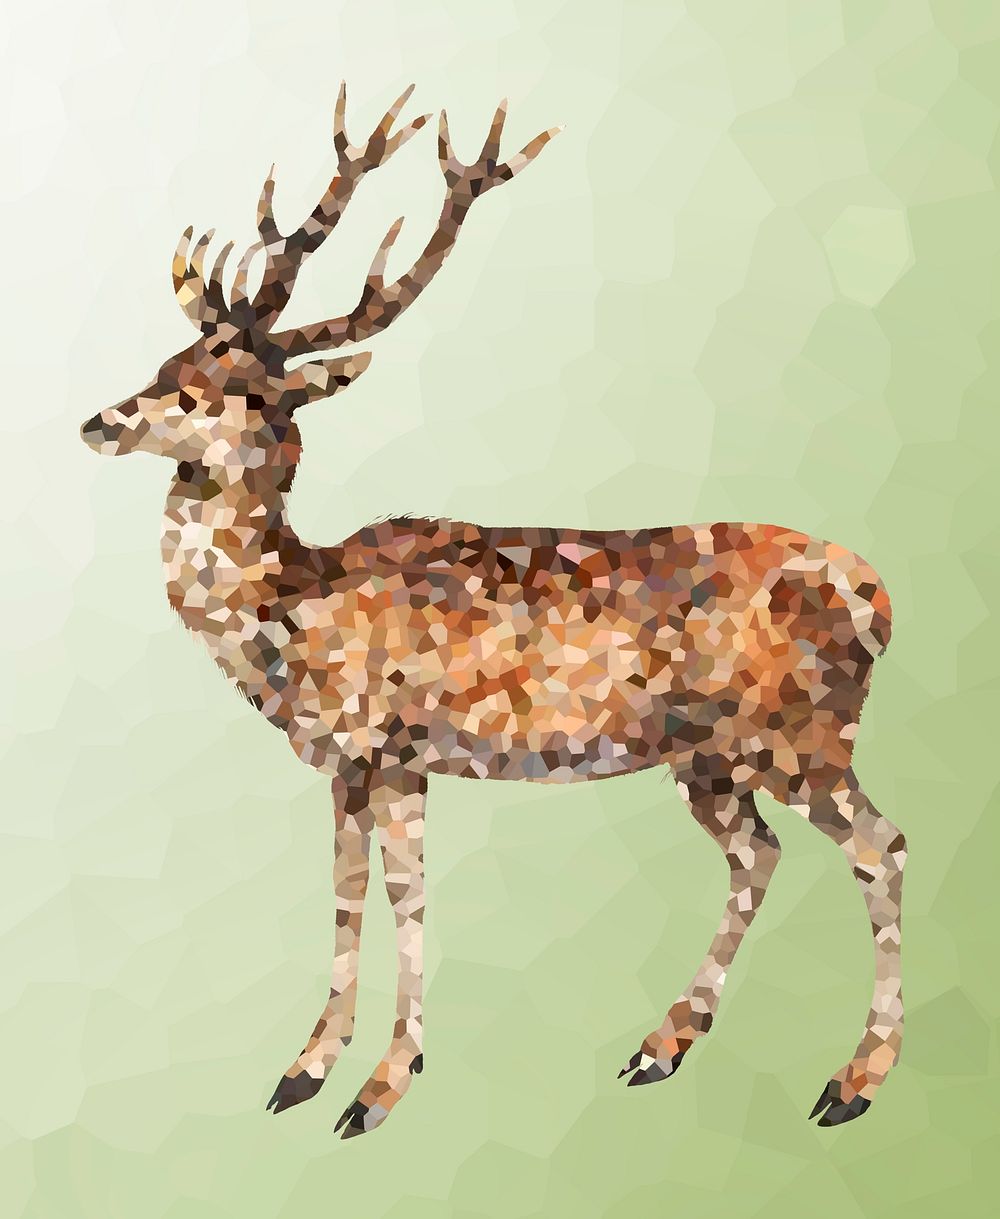 Crystallized style deer illustration design element